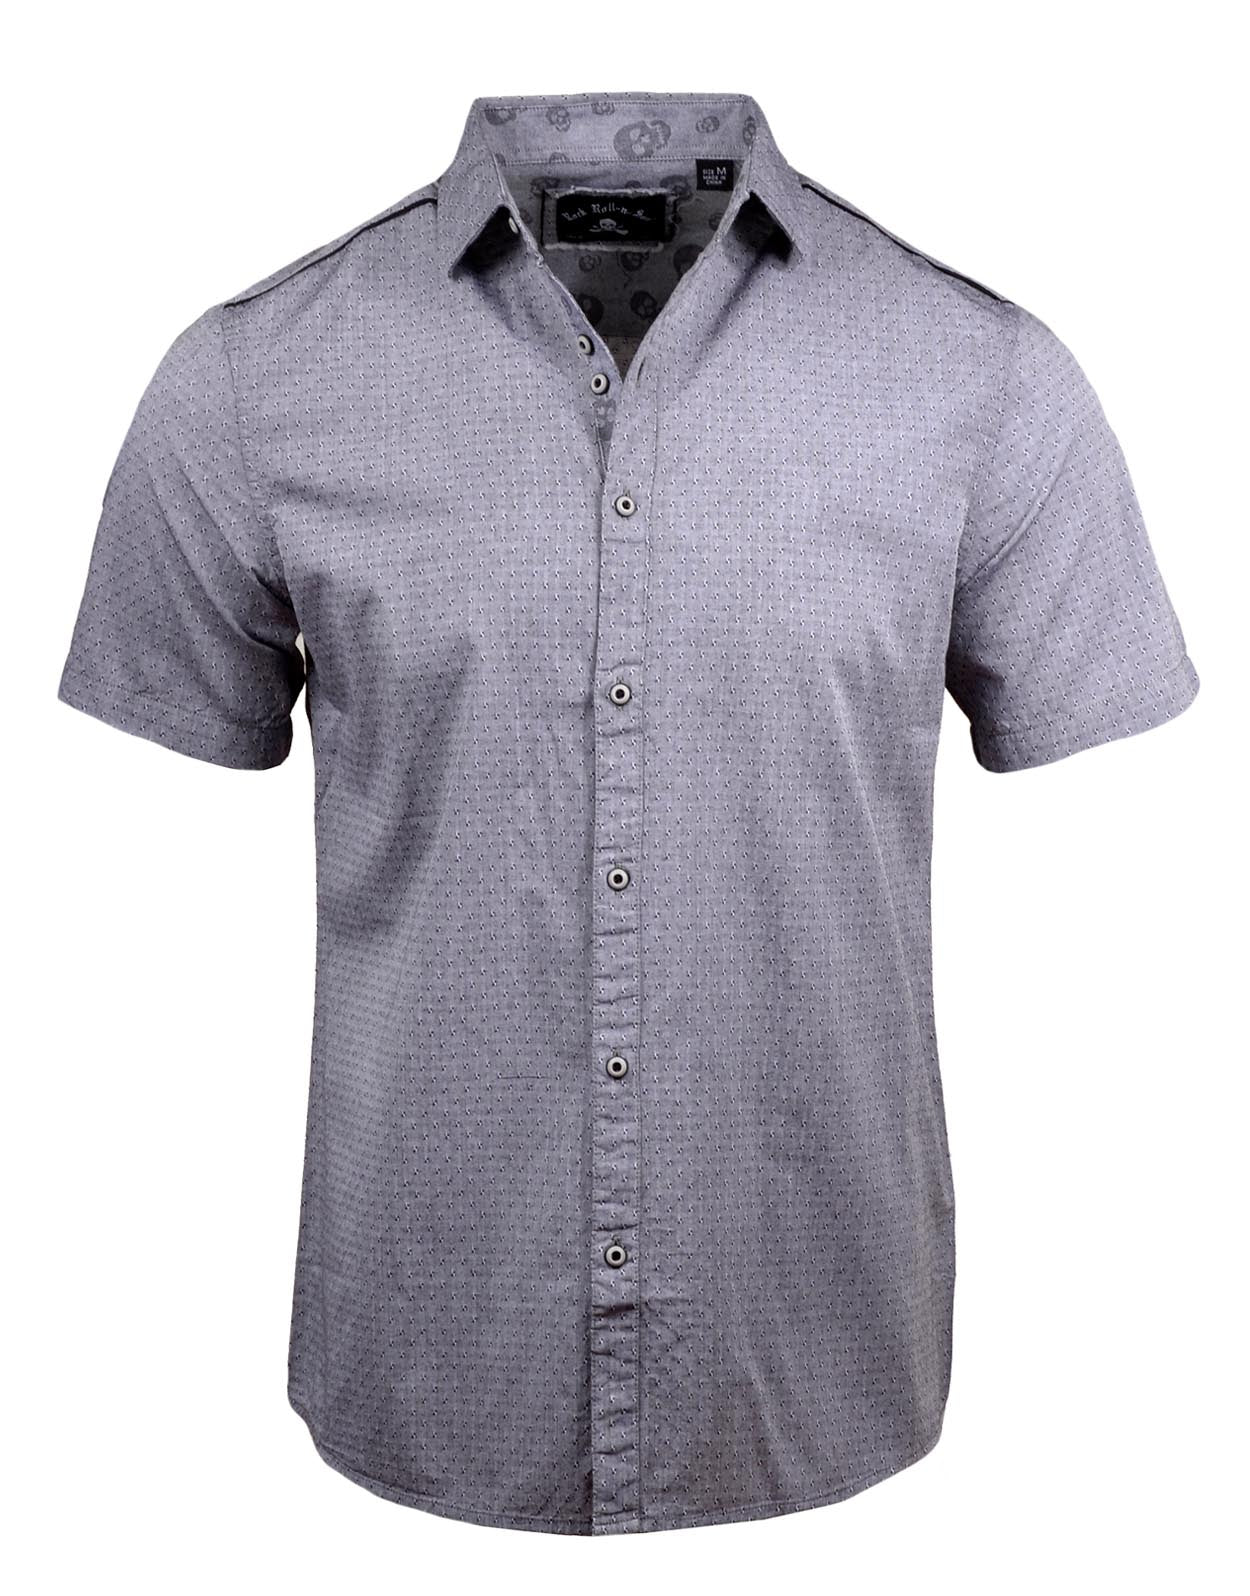 Men's SS Button Up Fashion Shirt Grey | Lets Dance Rock Roll N Soul ...